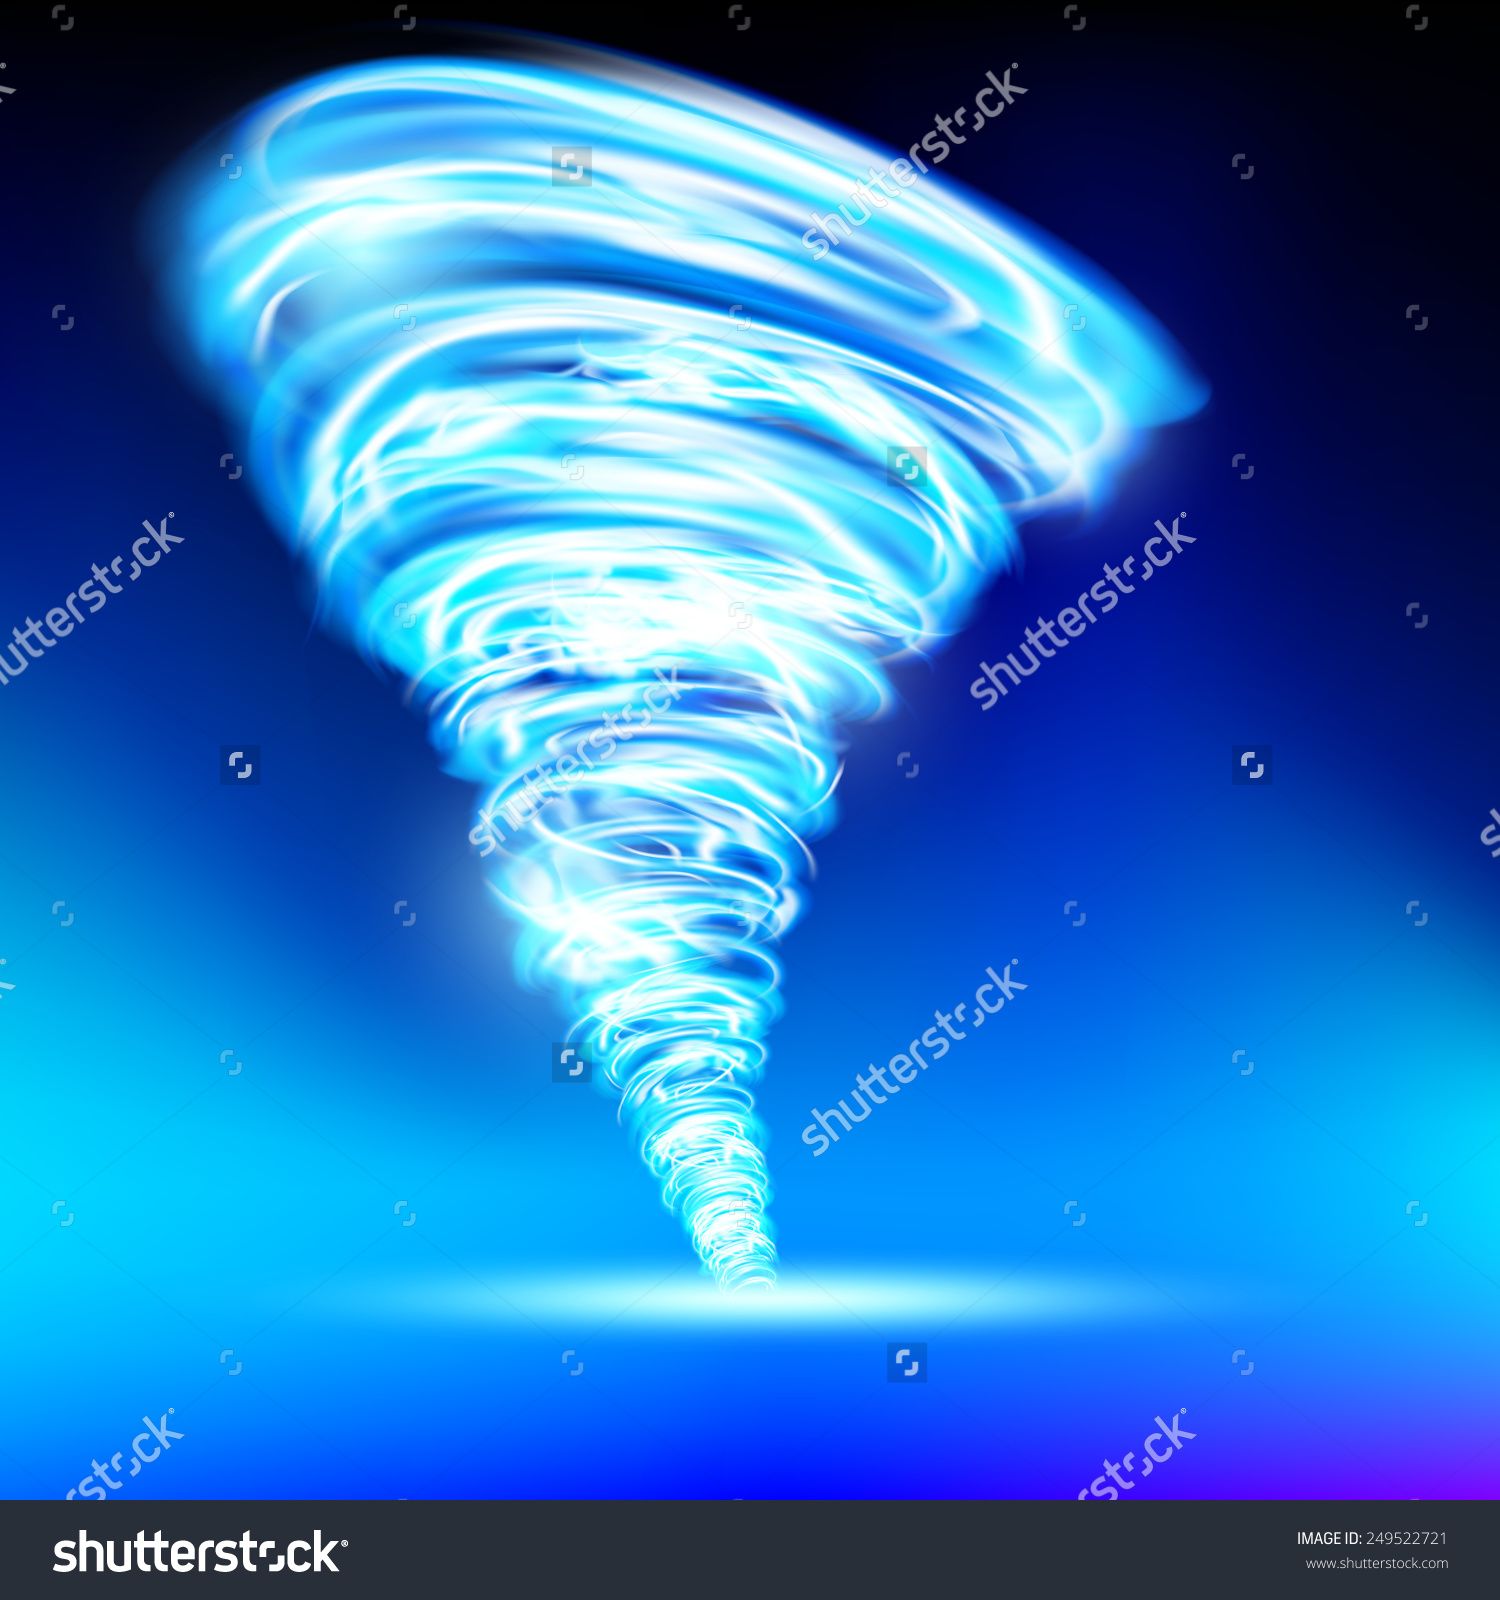 Tornado Consisting Of Blue Flame Stock Vector Illustration ...